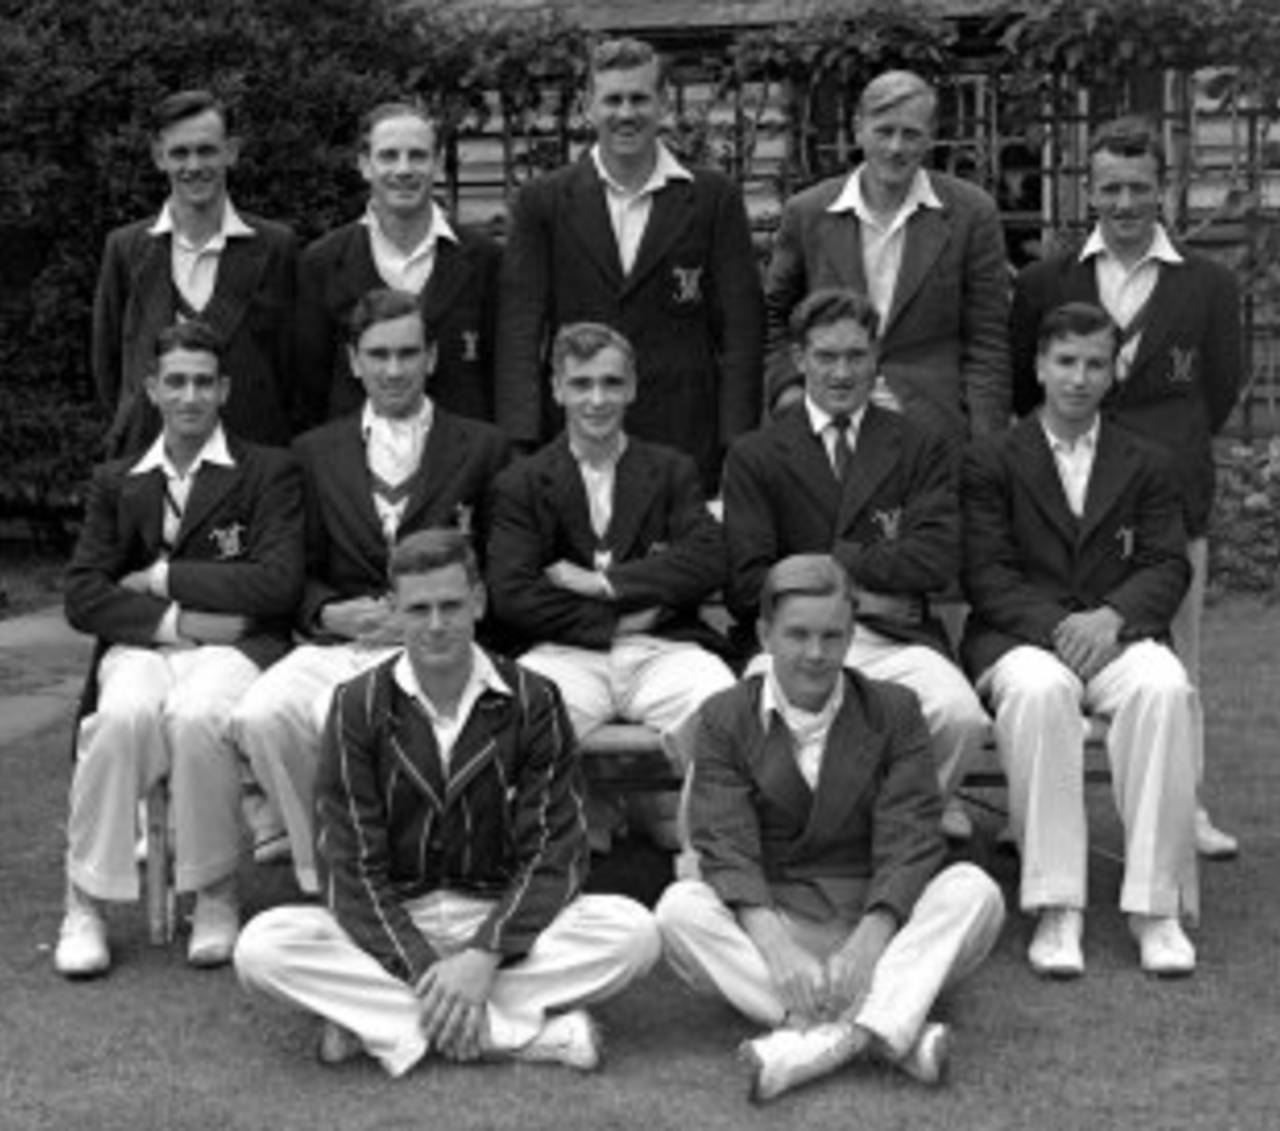 Basil Robinson (back row right) in the 1948 Oxford side at Lord's&nbsp;&nbsp;&bull;&nbsp;&nbsp;Marylebone Cricket Club